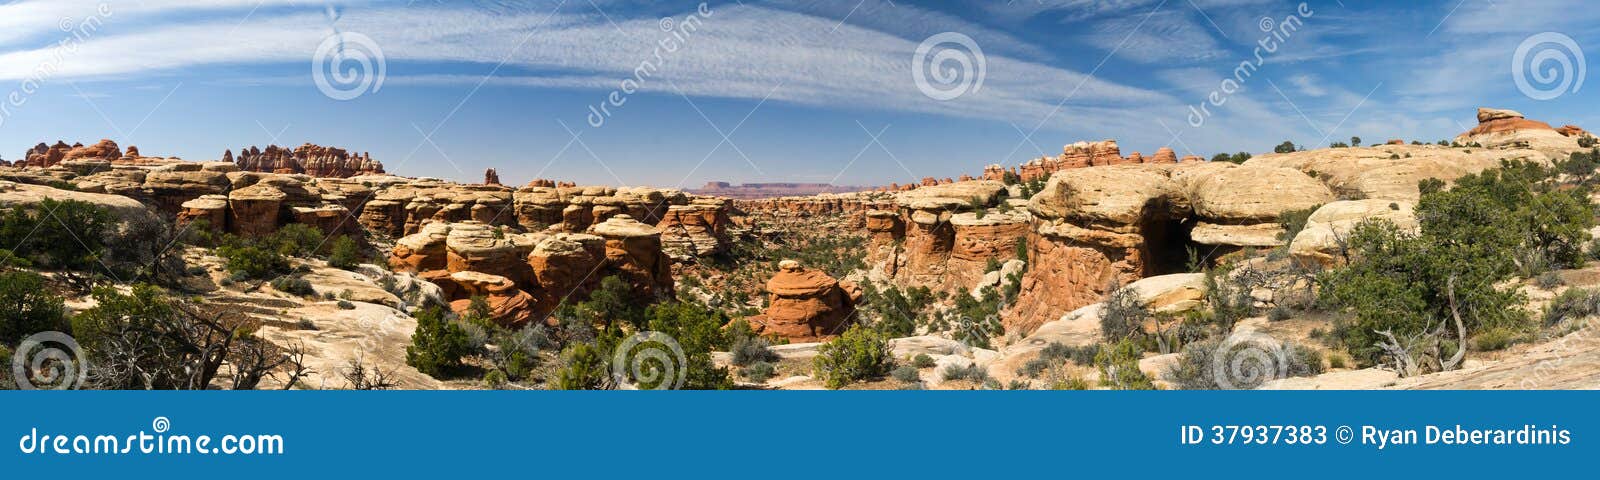 desert canyon landscape in american southwest